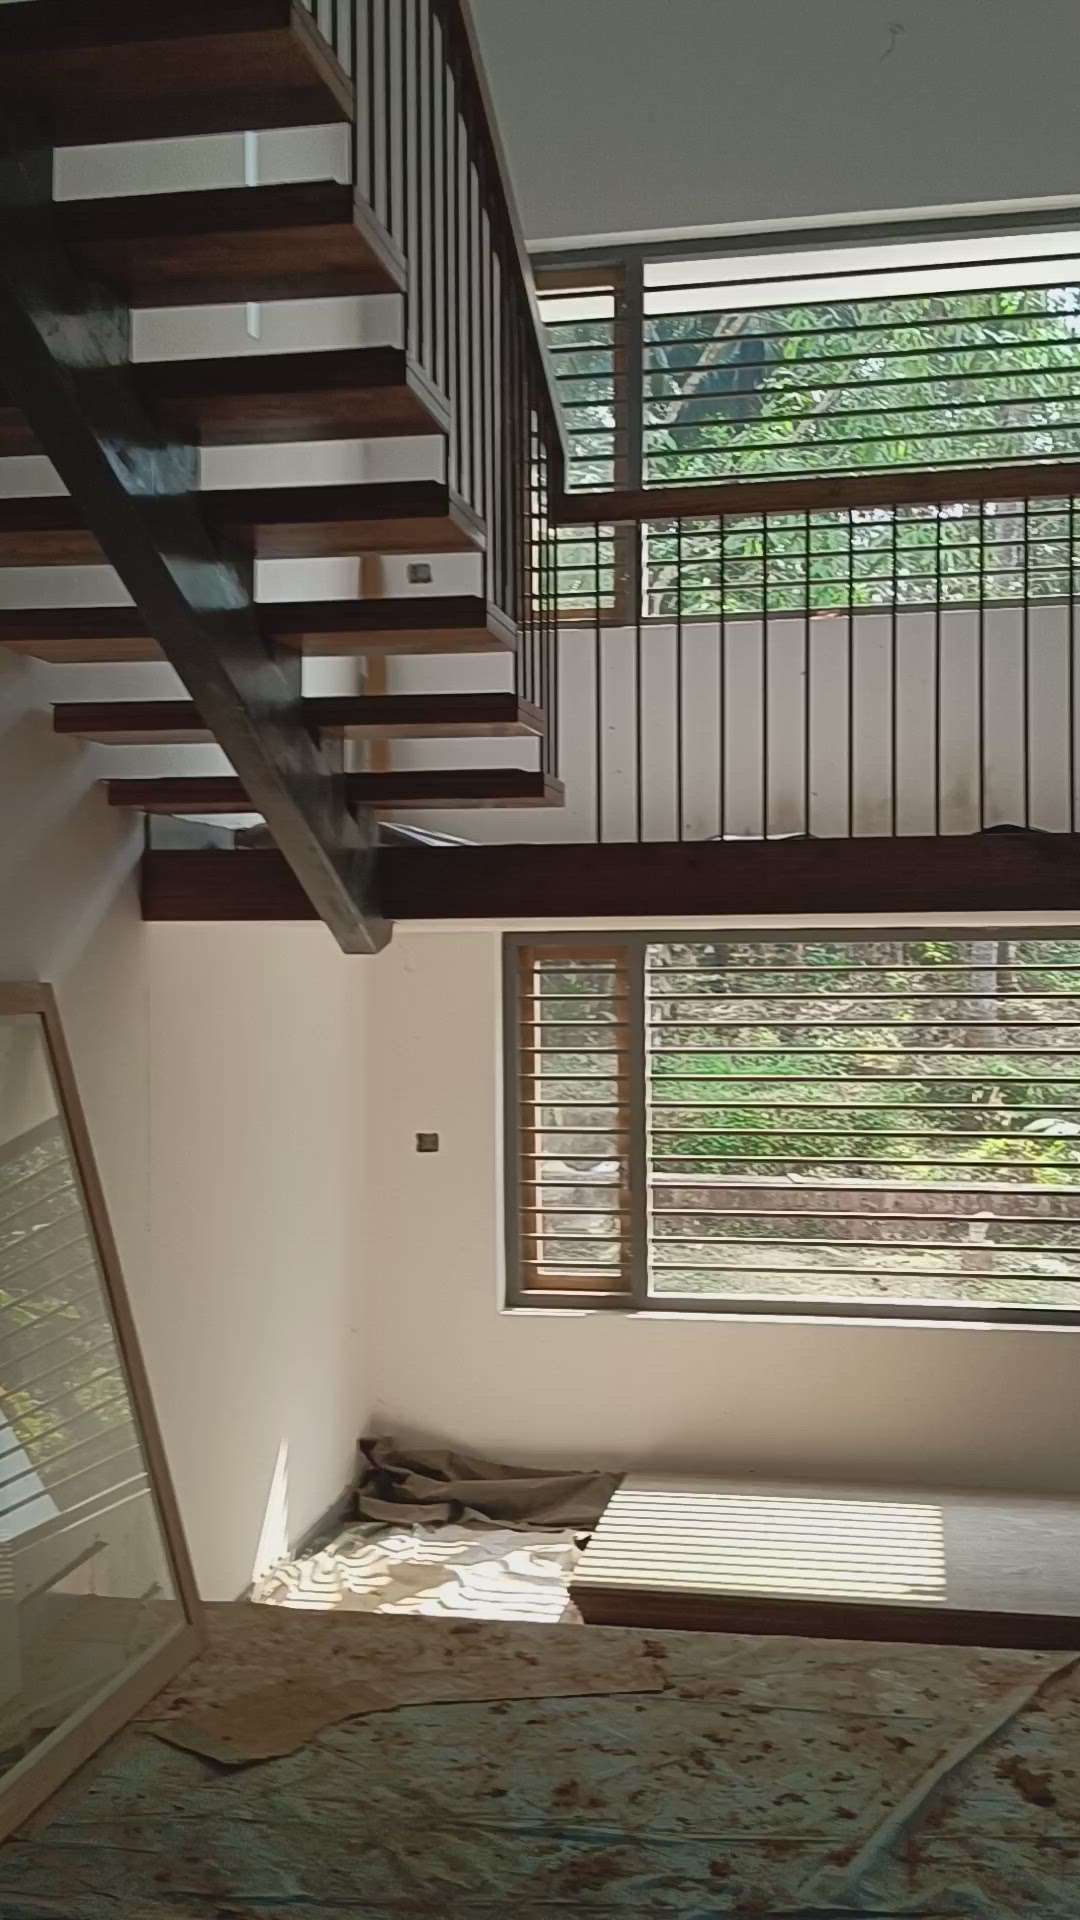 Single stringer staircase
ഇന്റീരിയർ വർക്കുകൾ അതിന്റെ മാക്സിമം ക്വാളിറ്റിയിൽ ചെയ്തു കൊടുക്കുന്നു
9496361476

 #InteriorDesigner
 #Architectural&Interior
 #StaircaseDesigns
#simplestylehomeplan